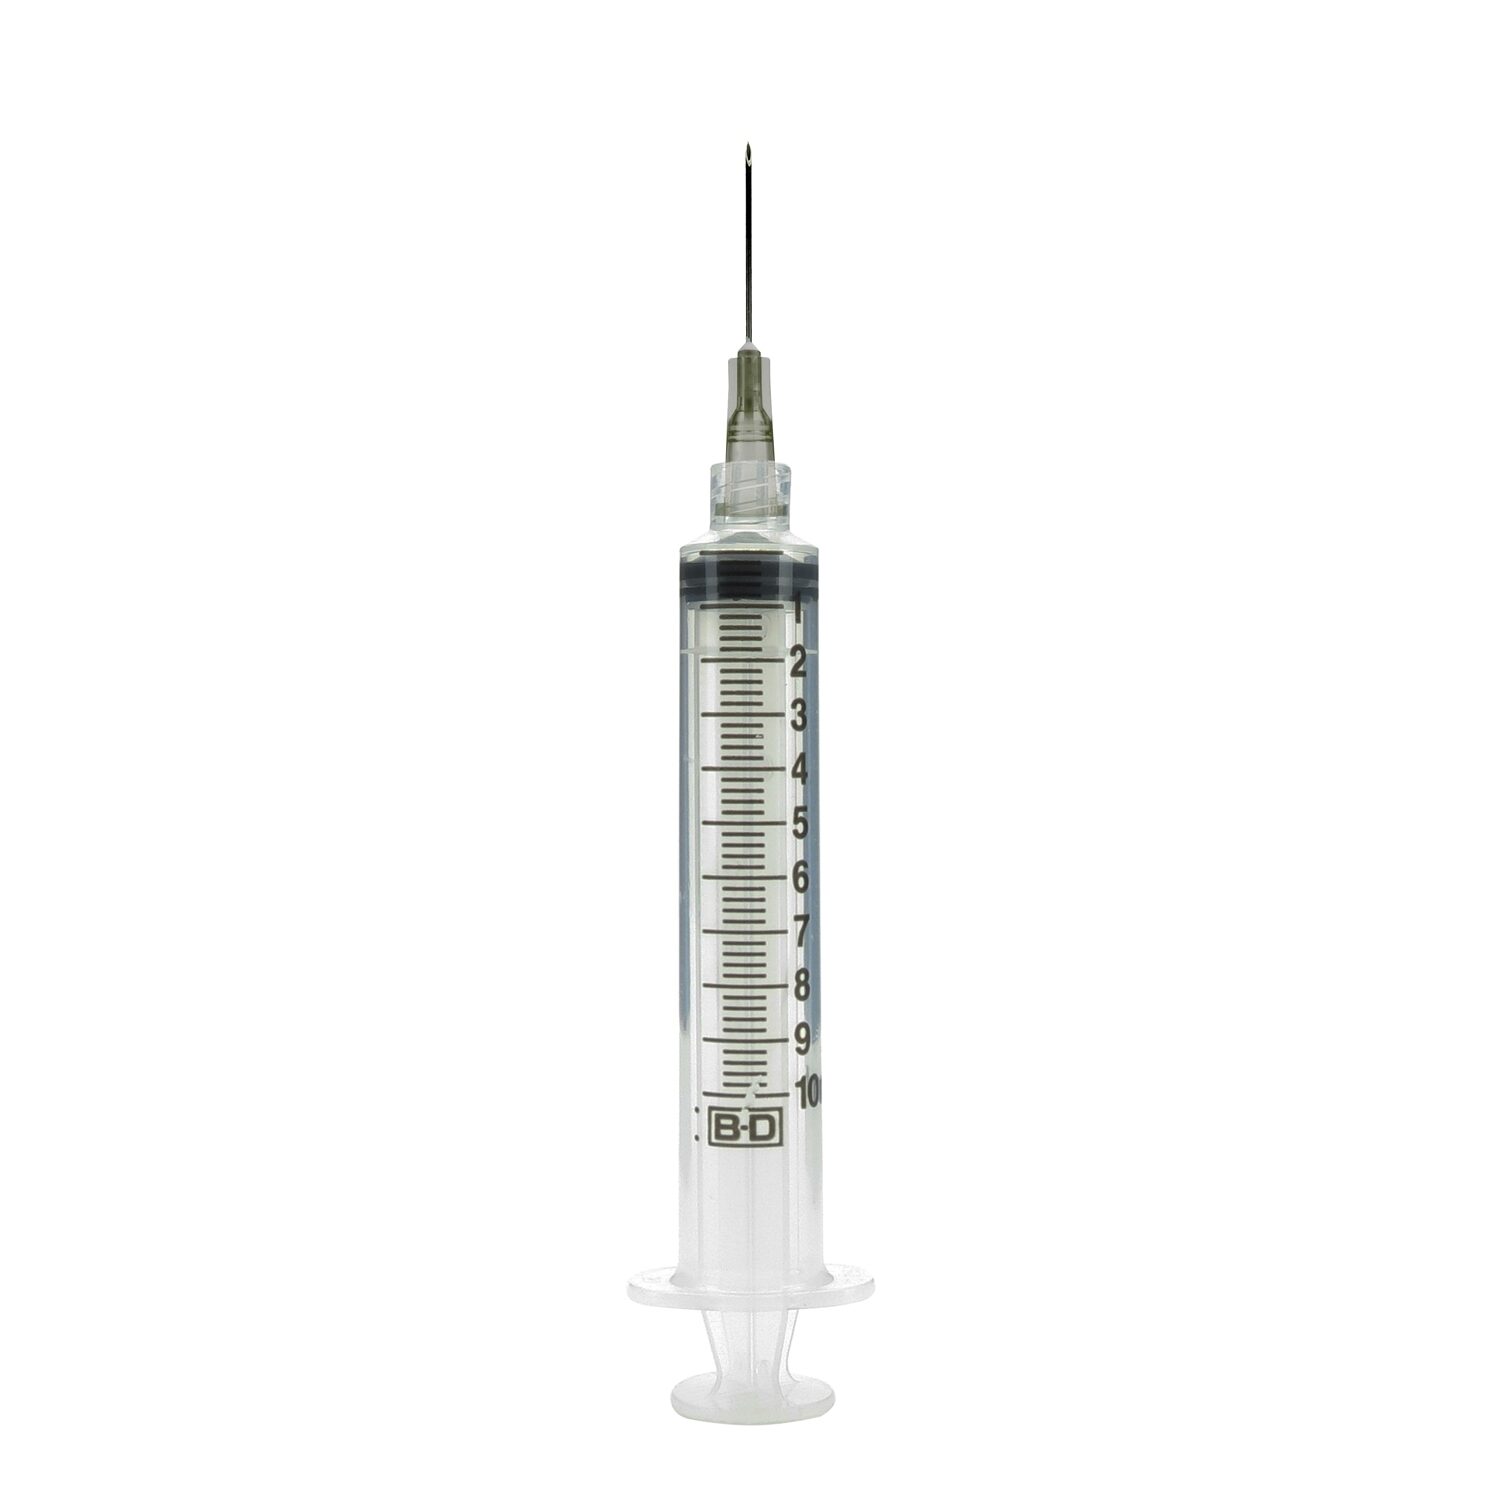 Shop 1cc (1ml) Luer-Lock Syringe & Hypodermic Needle Online